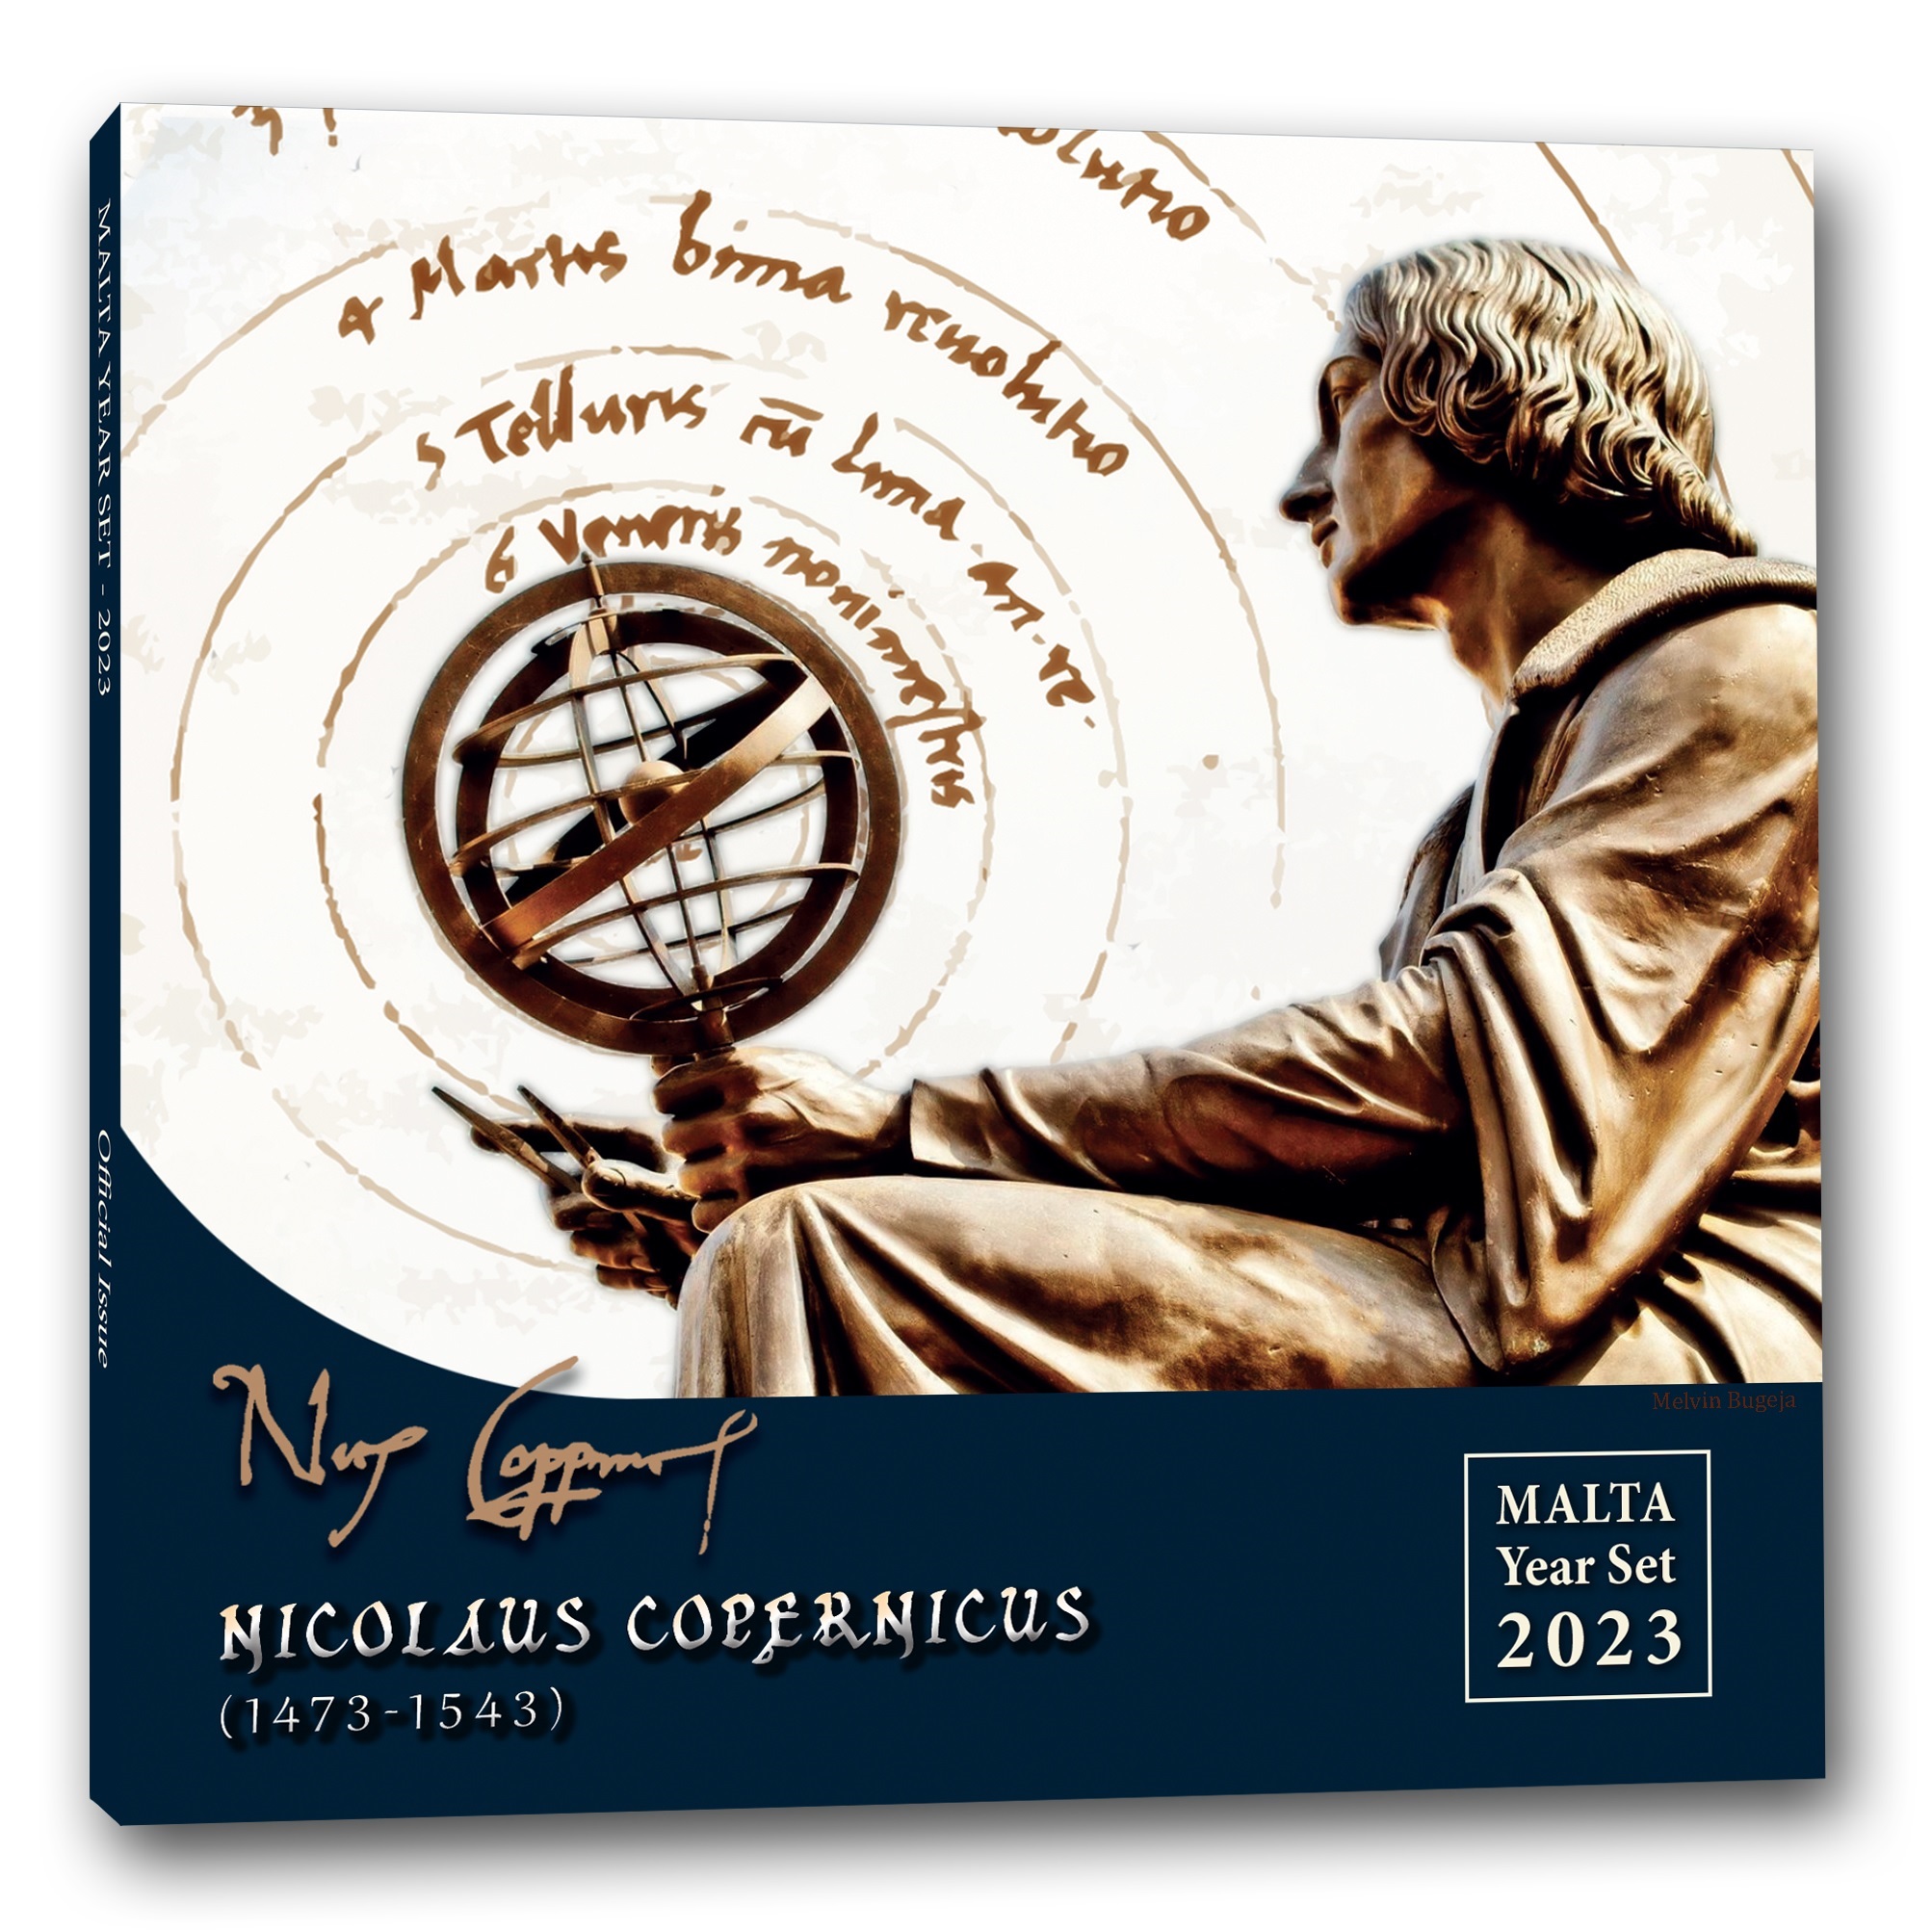 (EUR13.BU.set.2023) BU coin set Malta 2023 (Nicolaus Copernicus)